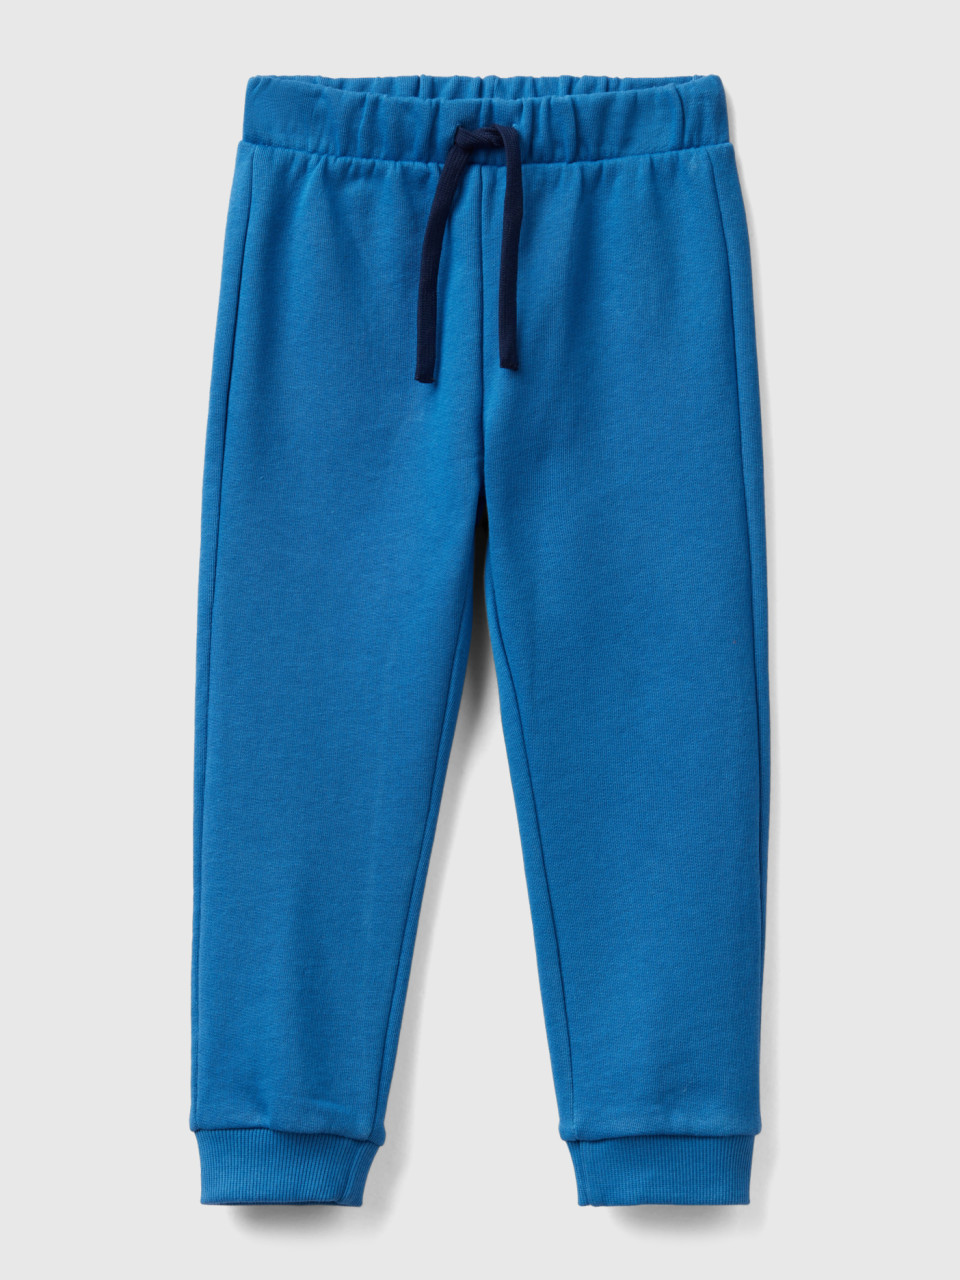 Benetton, Sweatpants With Pocket, Blue, Kids